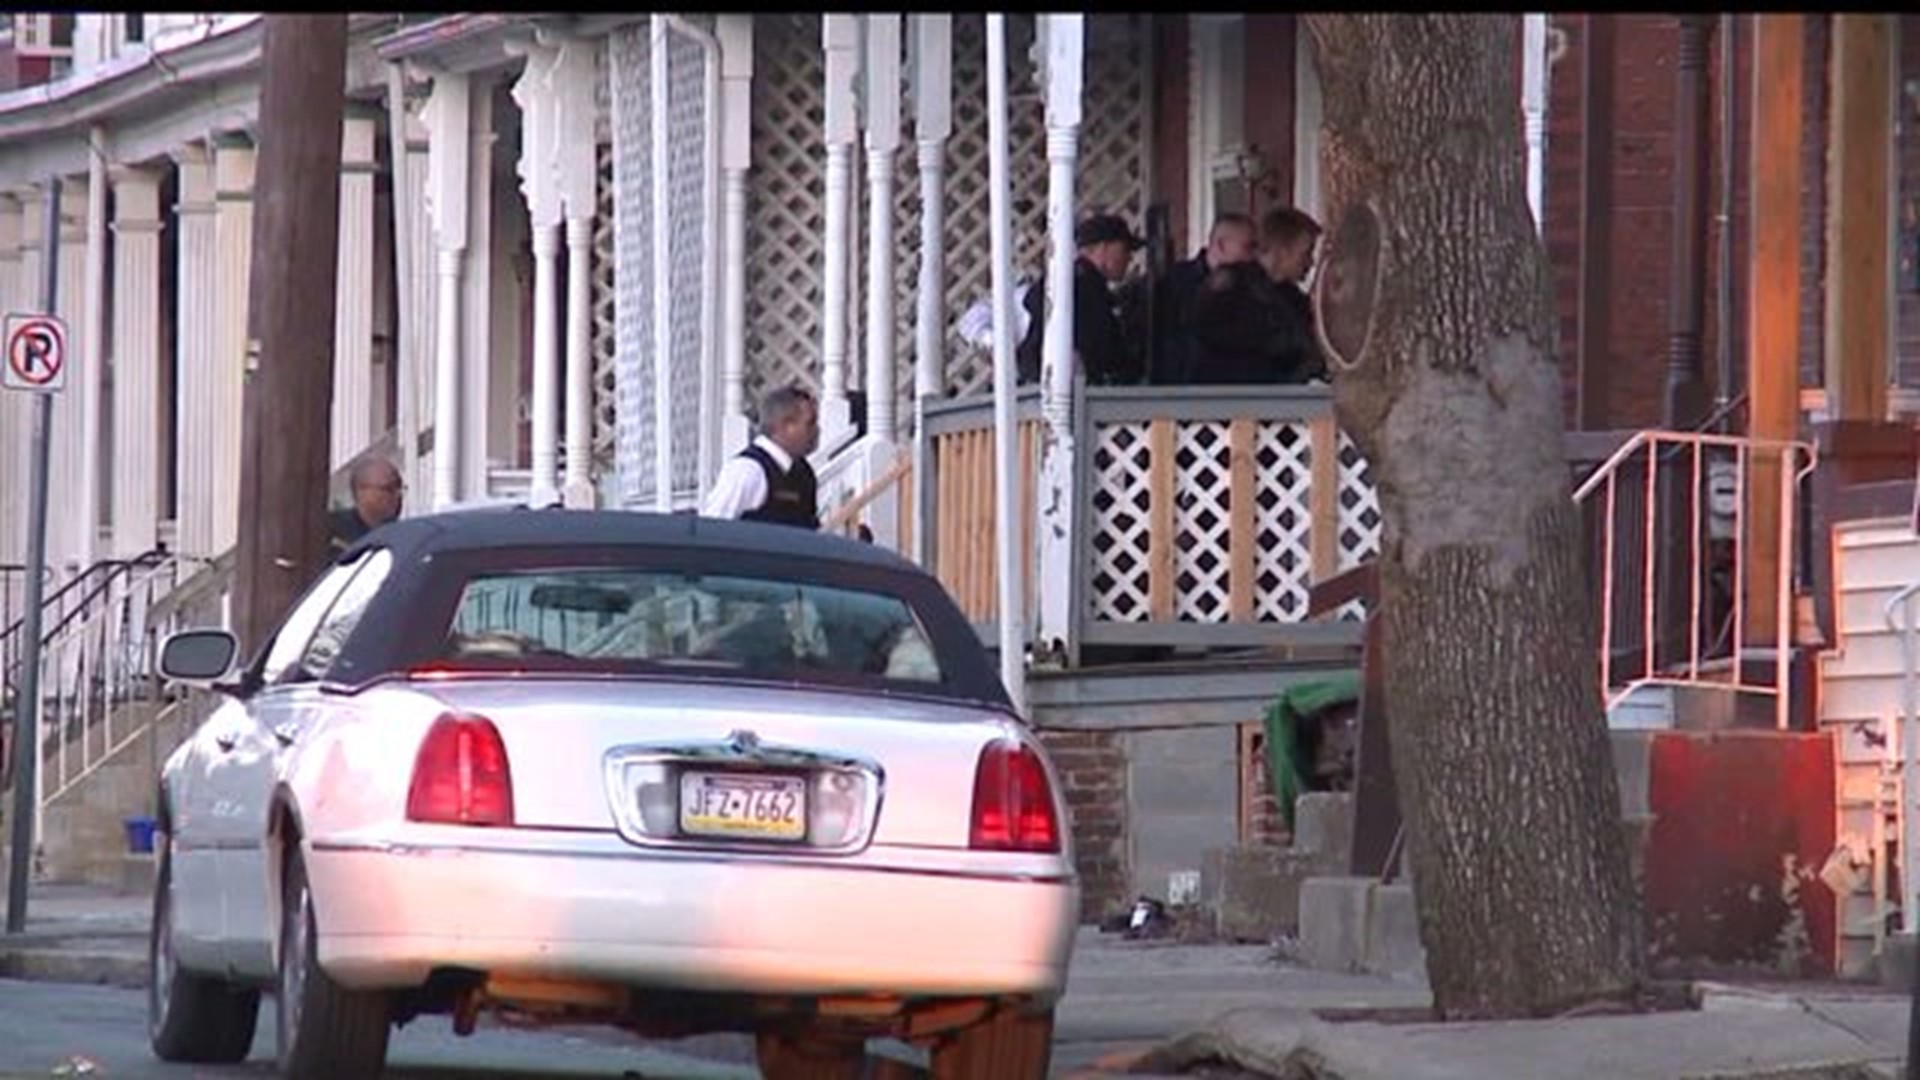 Officers Investigate Shooting in Harrisburg